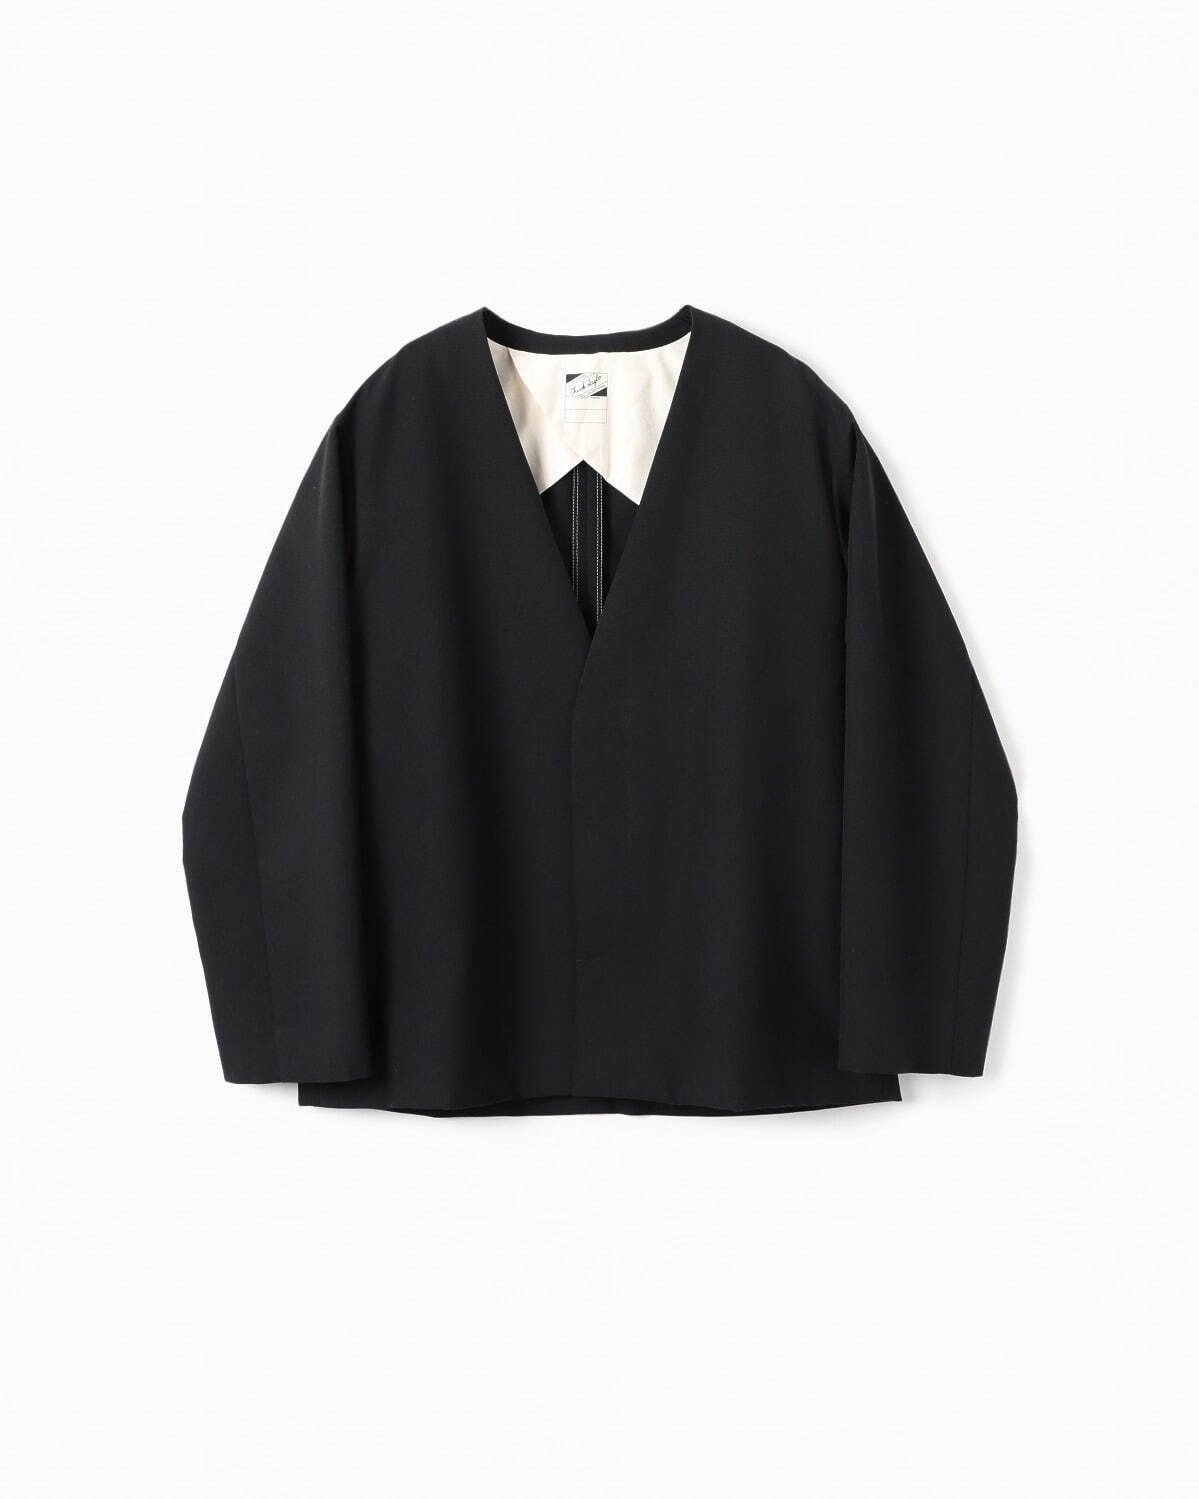 Converse Japan's collarless black blazer-style jacket